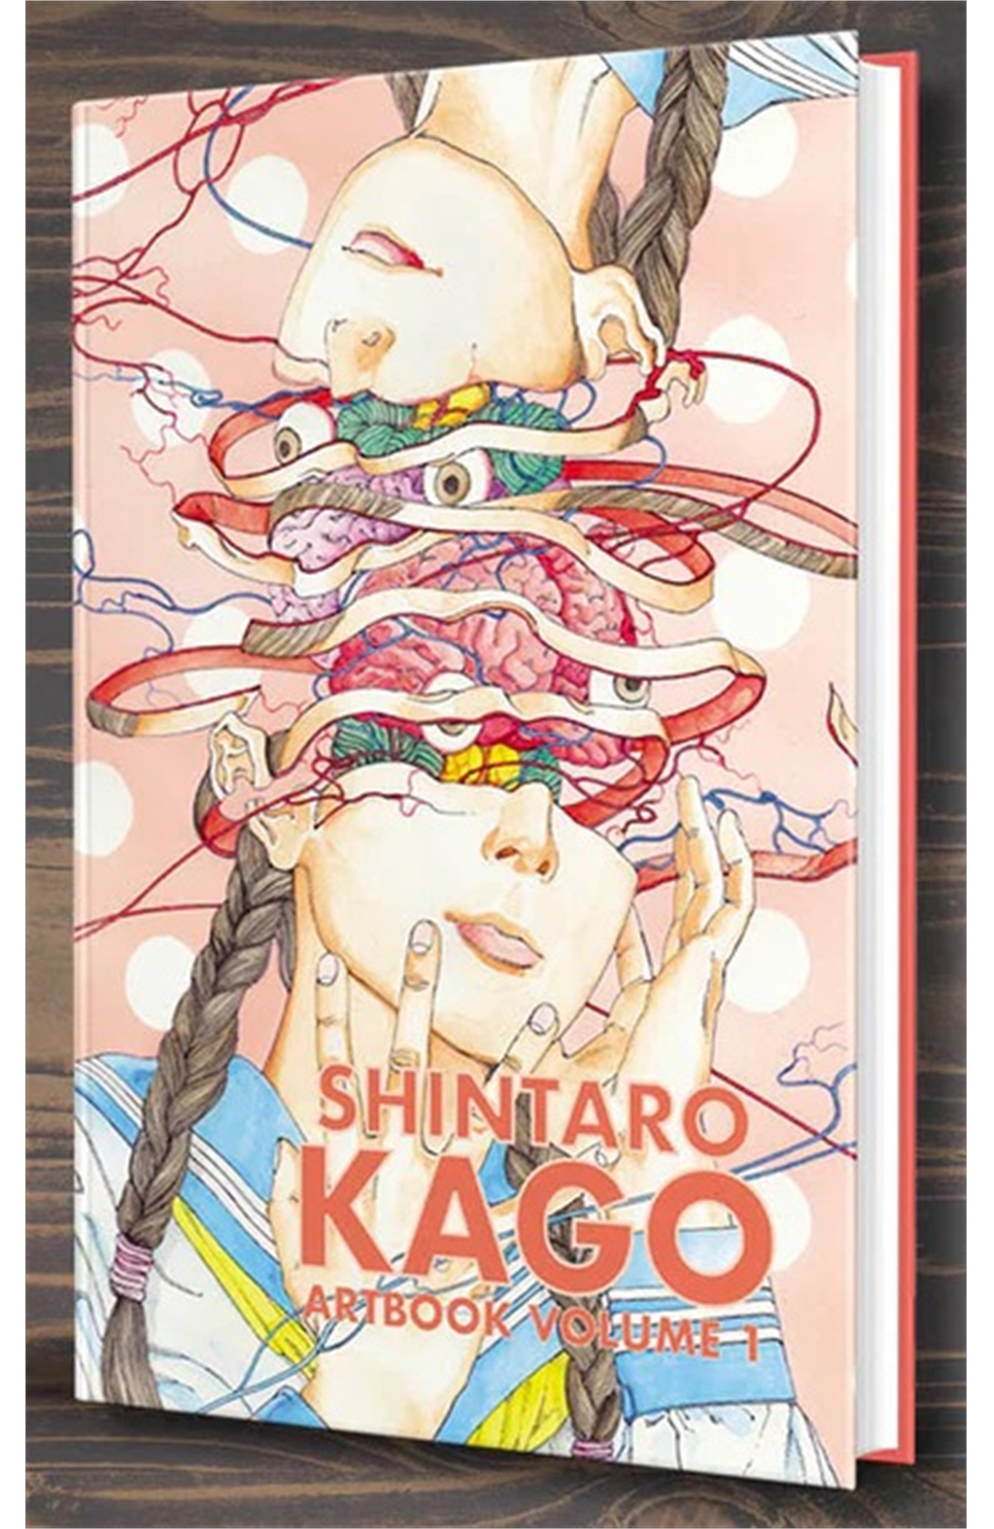 Shintaro Kago: Artbook Volume 1